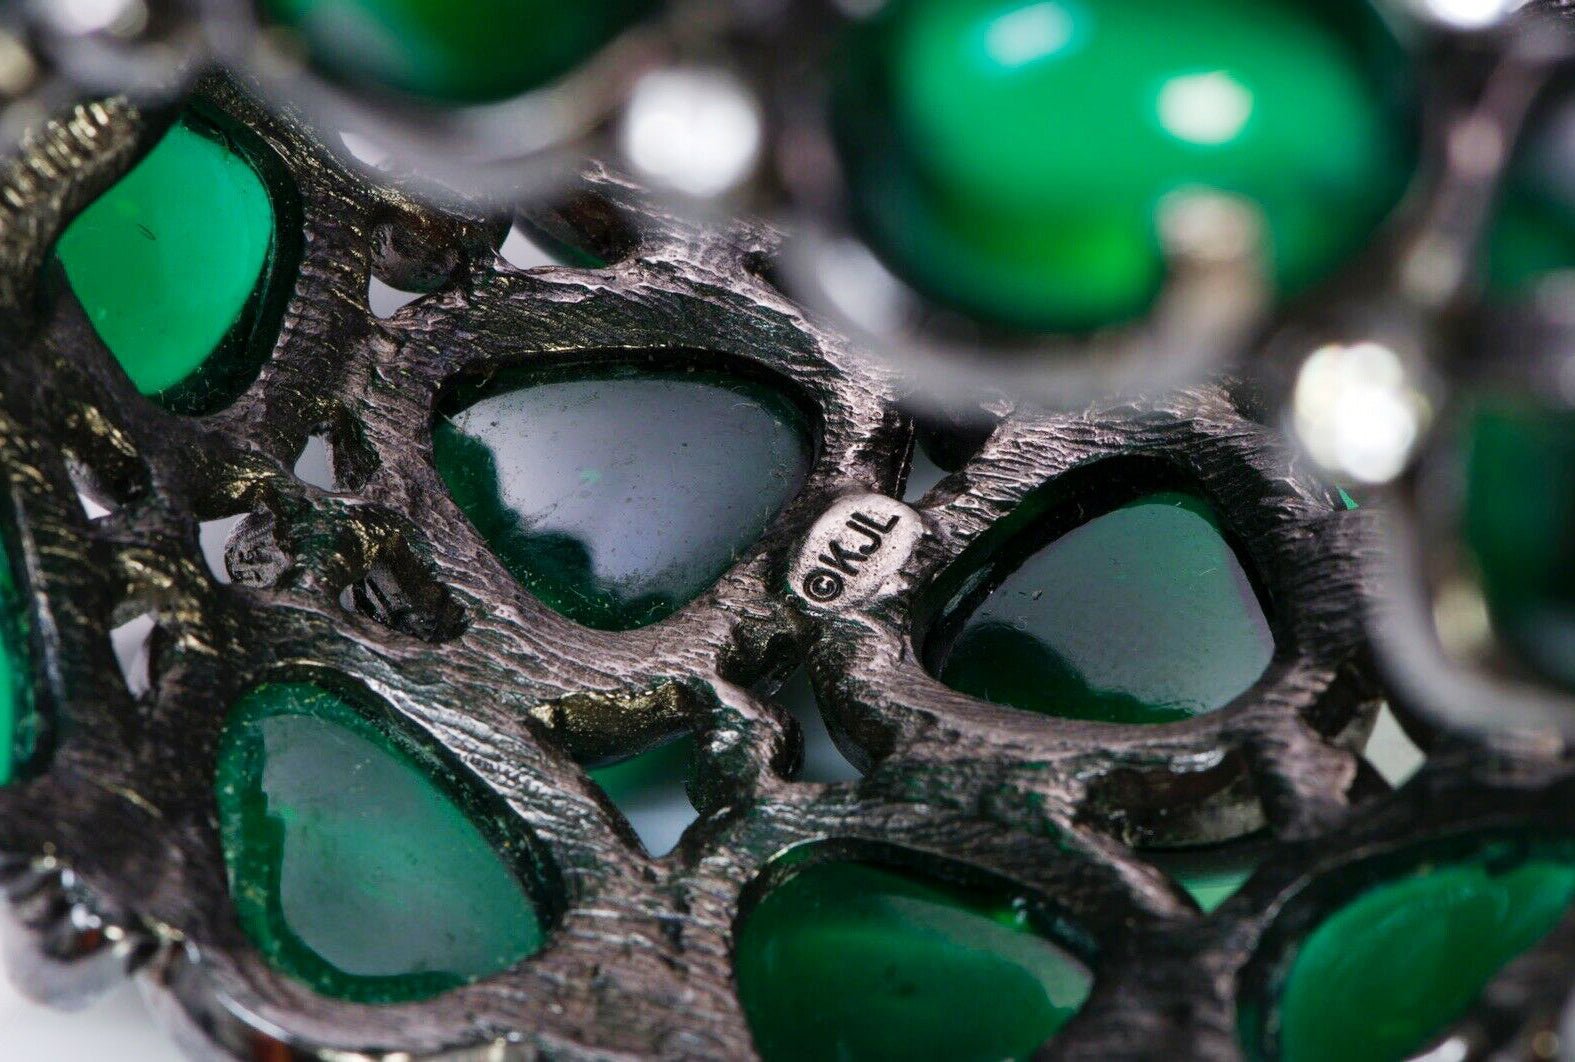 Kenneth Jay Lane KJL Wide Cabochon Green Glass Bangle Bracelet